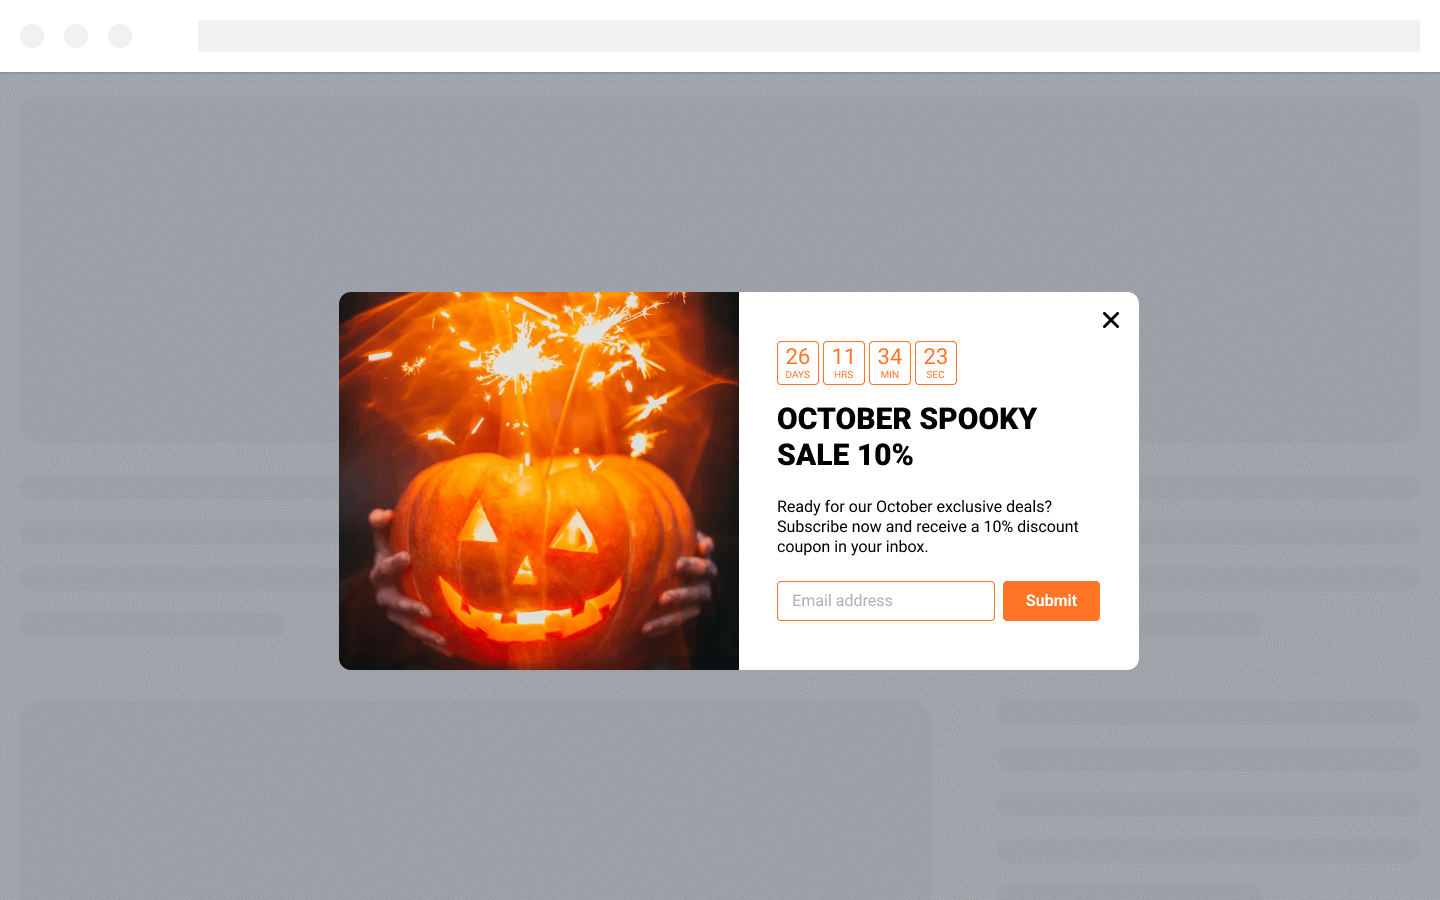 Spooky Halloween Sale